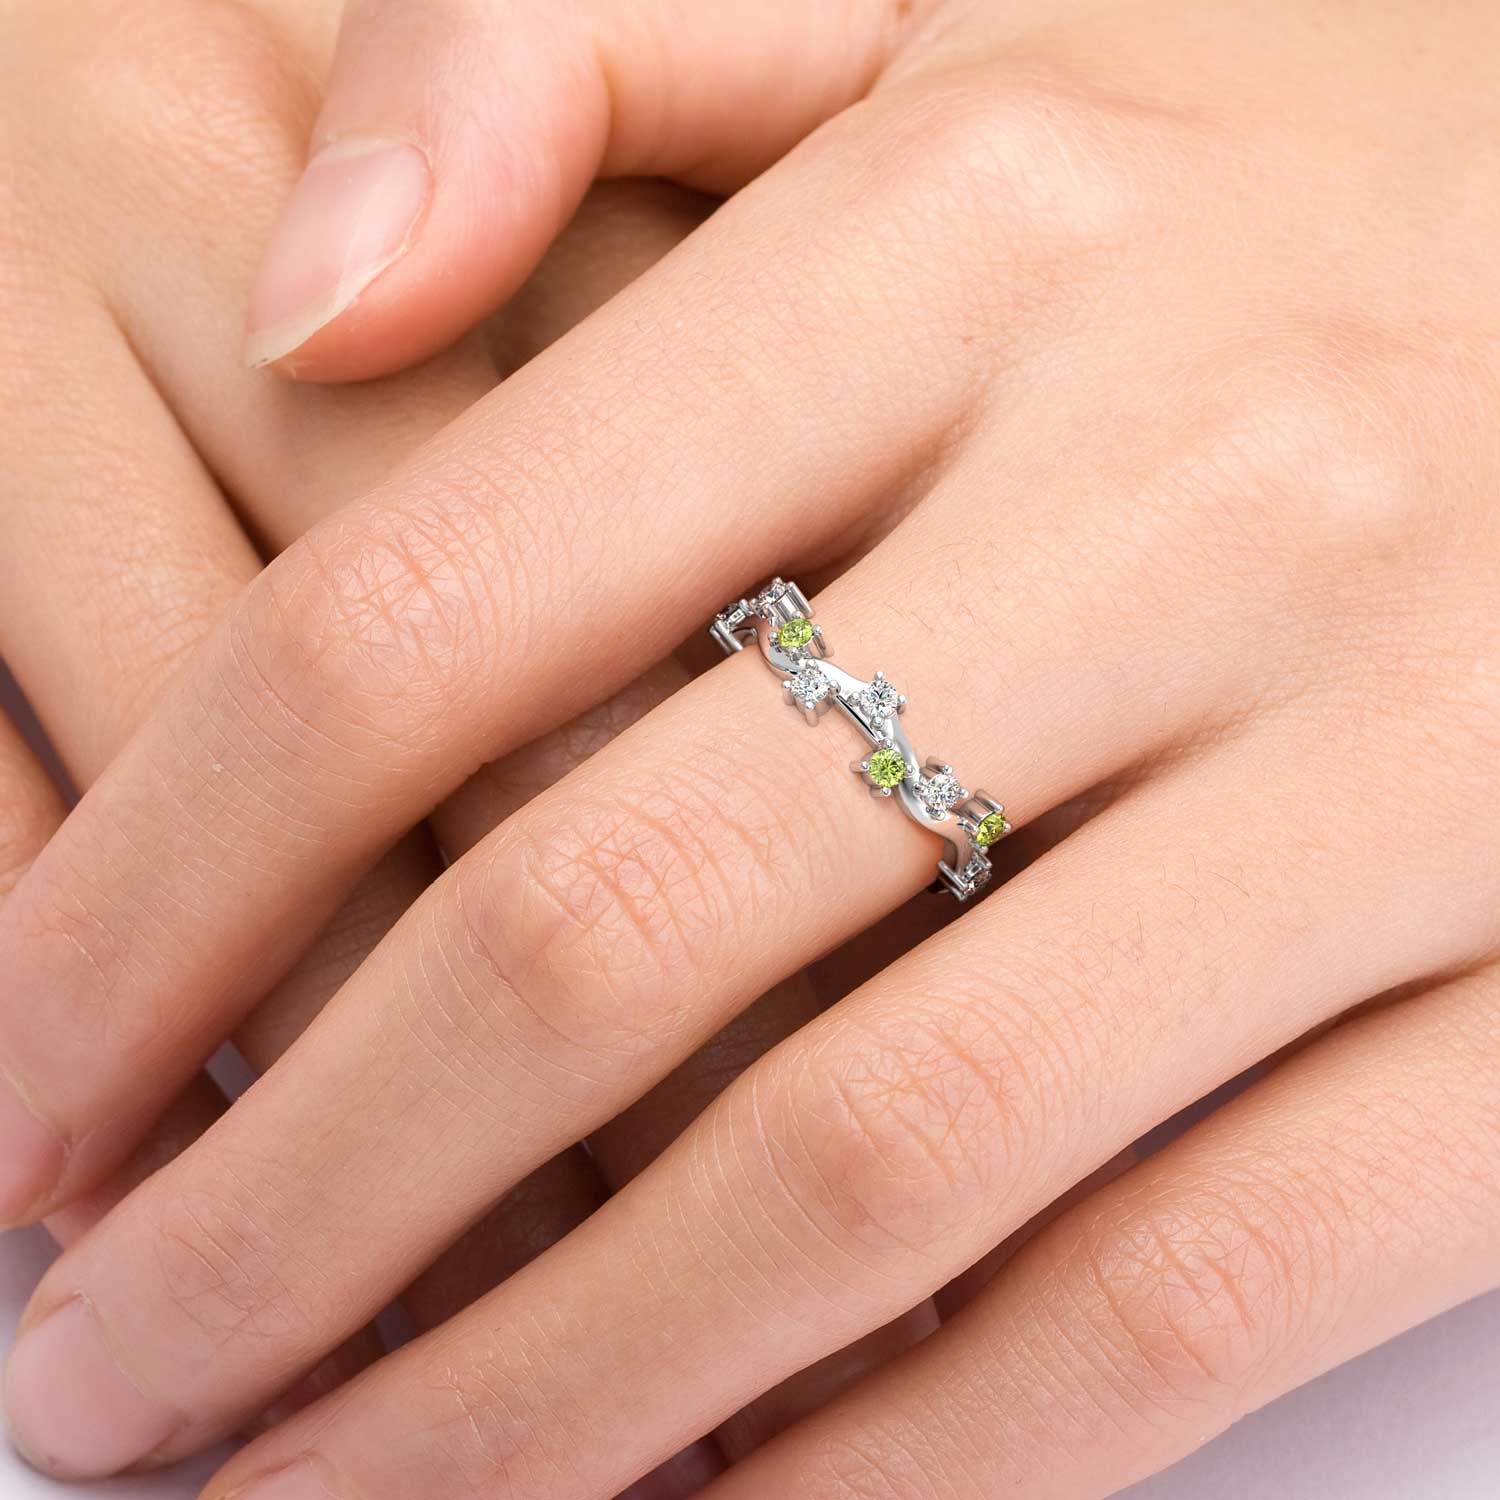 Hand wearing a Peridot Galaxy ring, showcasing a vibrant peridot gemstone set in a galaxy-inspired silver band.